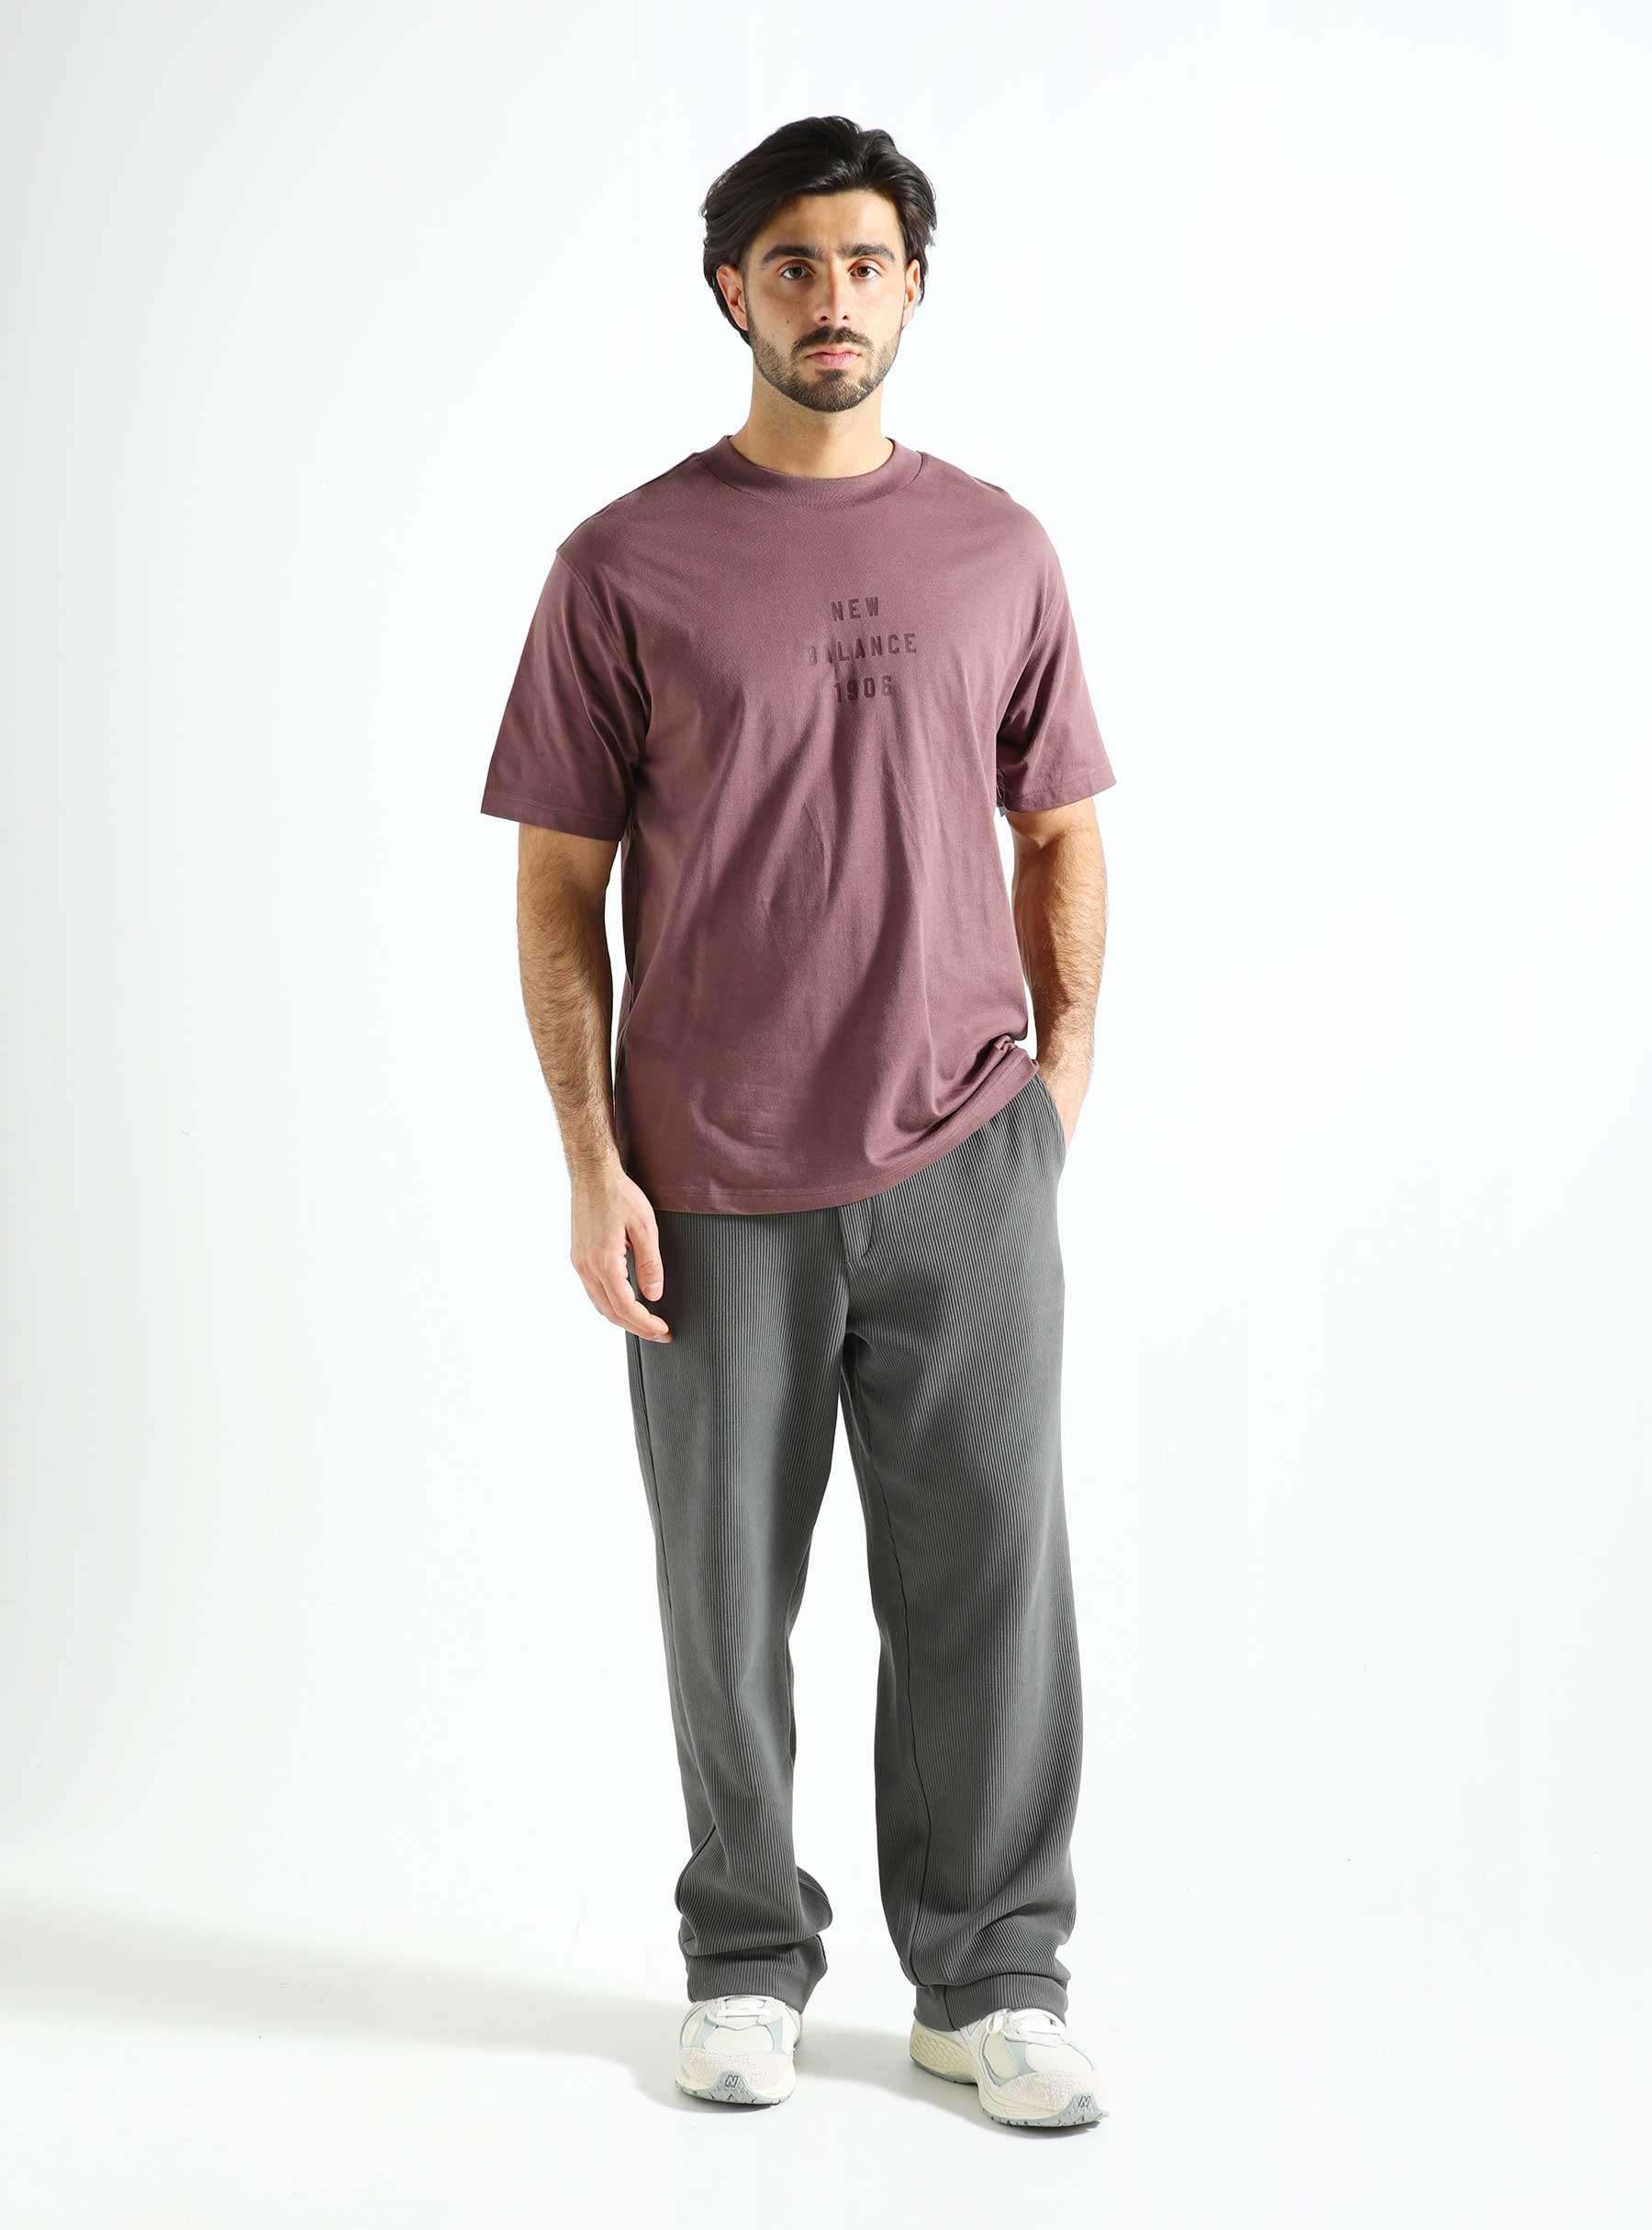 New Balance Graphic T-shirt Licorice MT41519-LIE